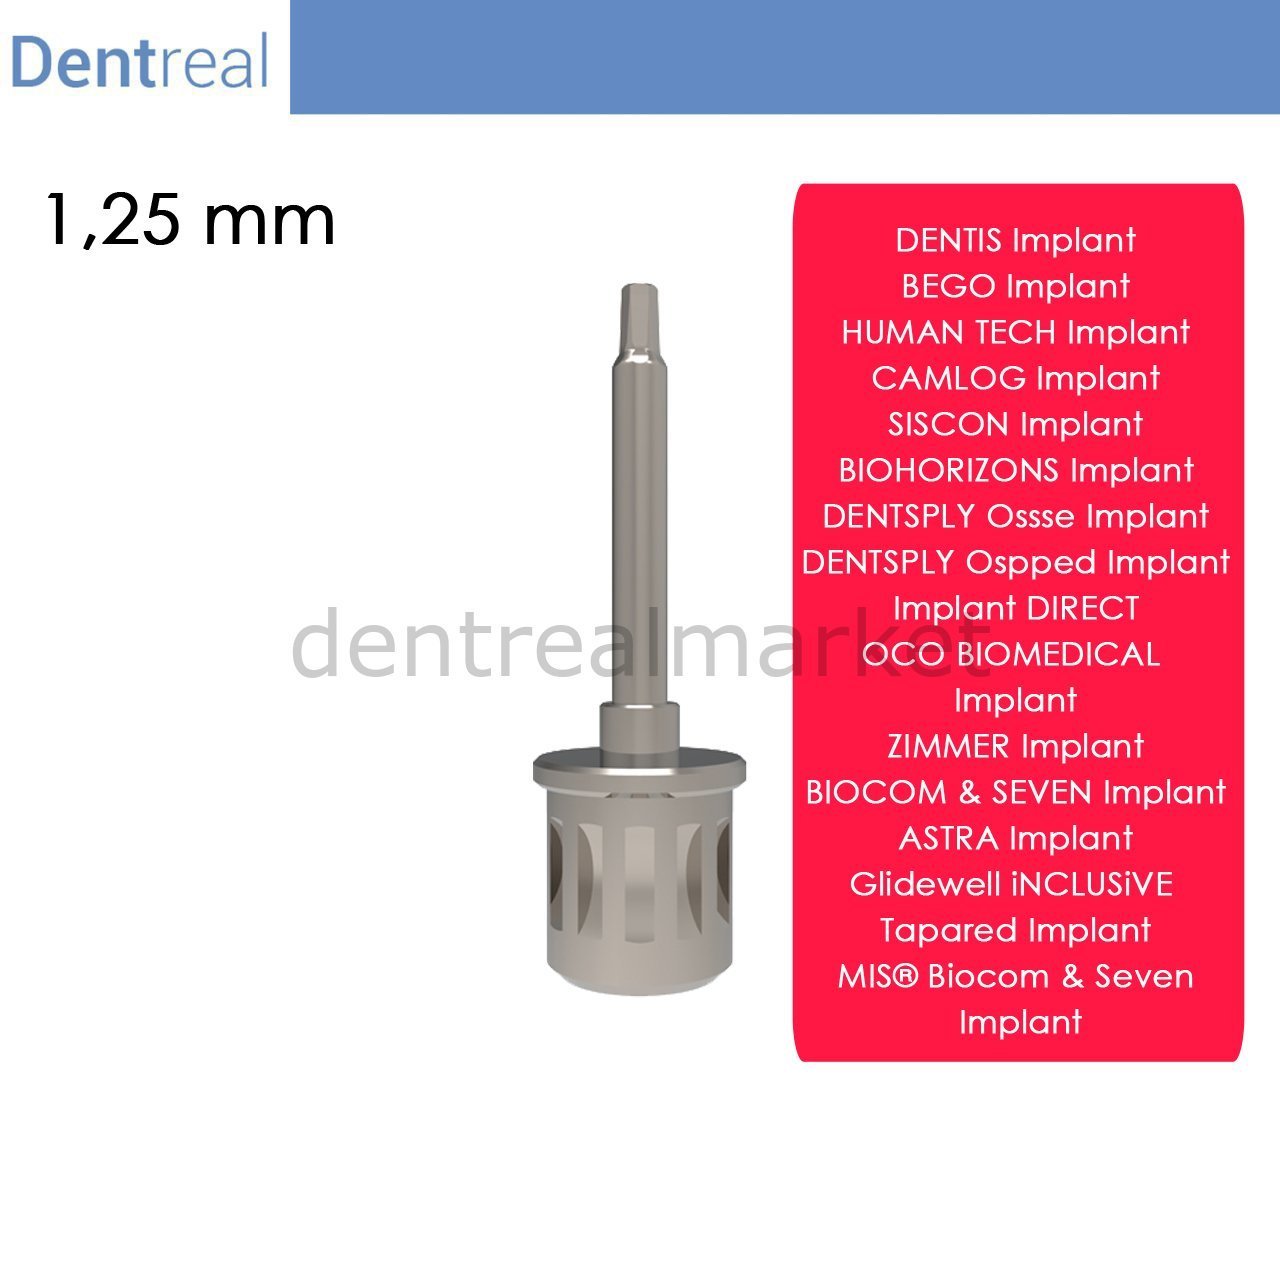 DentrealStore - Dentreal Screwdriver for Astra Implant - 1.25 mm Hex Driver